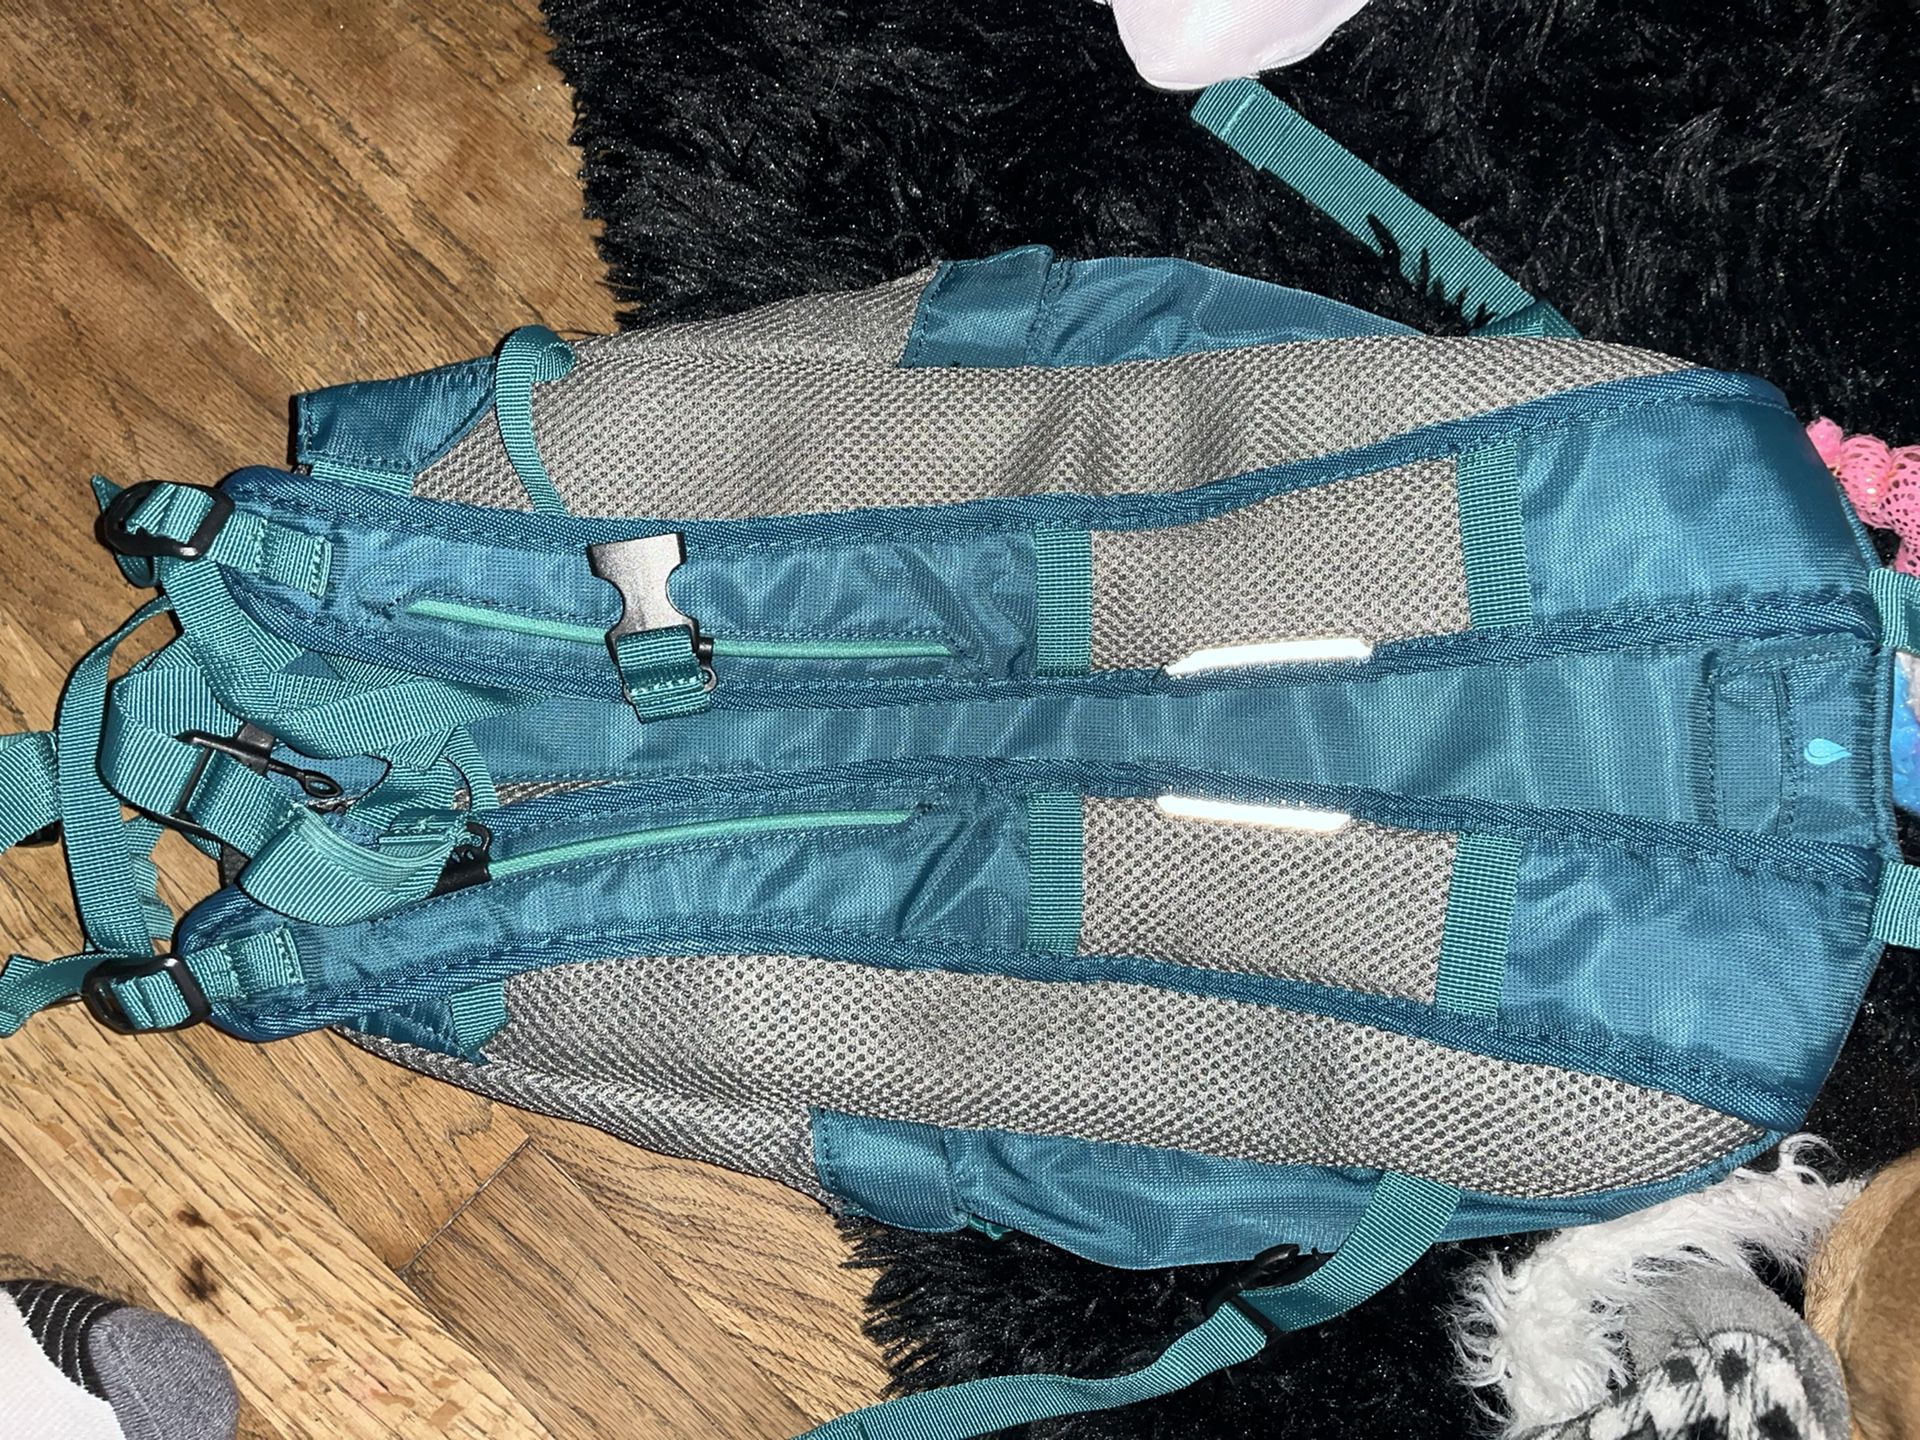 Brand New Embark Waterproof Backpack 40$